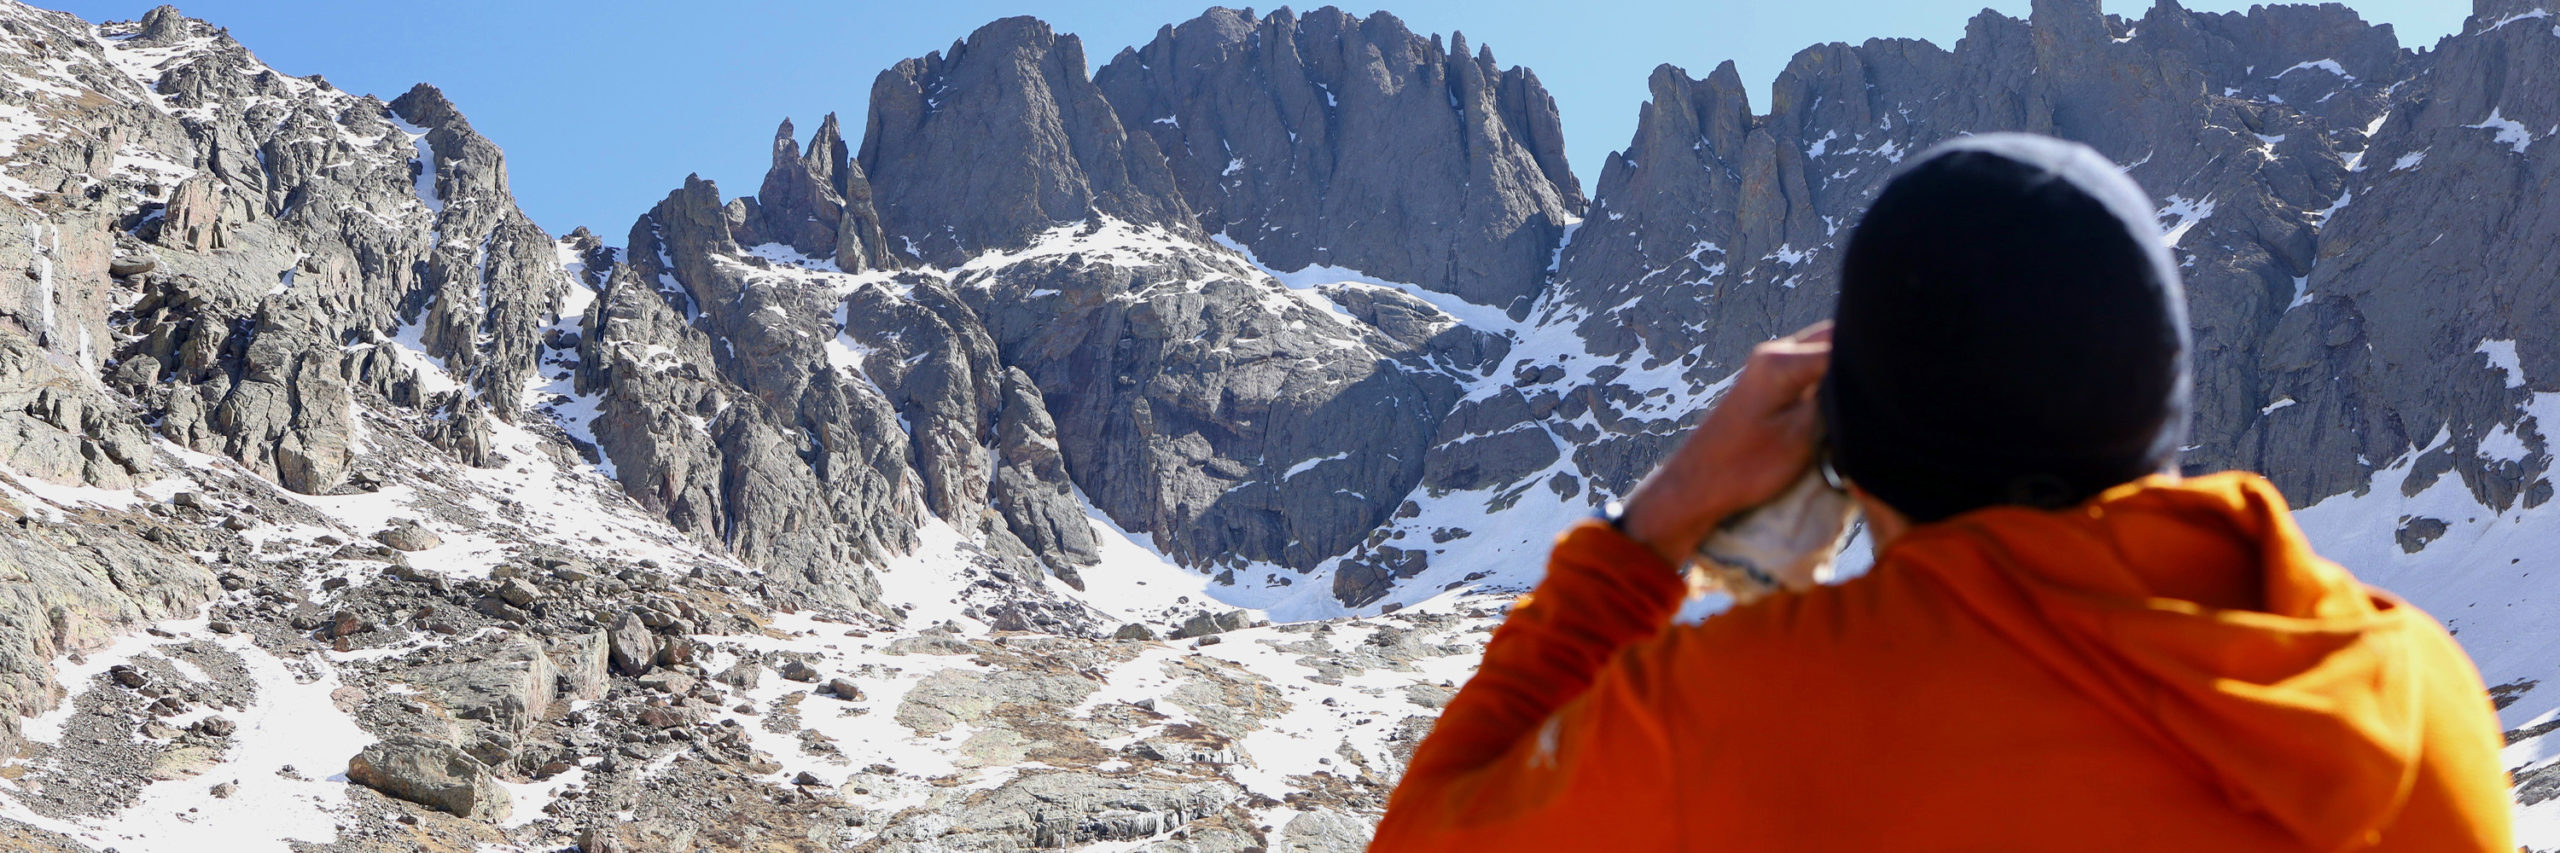 climber facing a frozen rocky mountainside